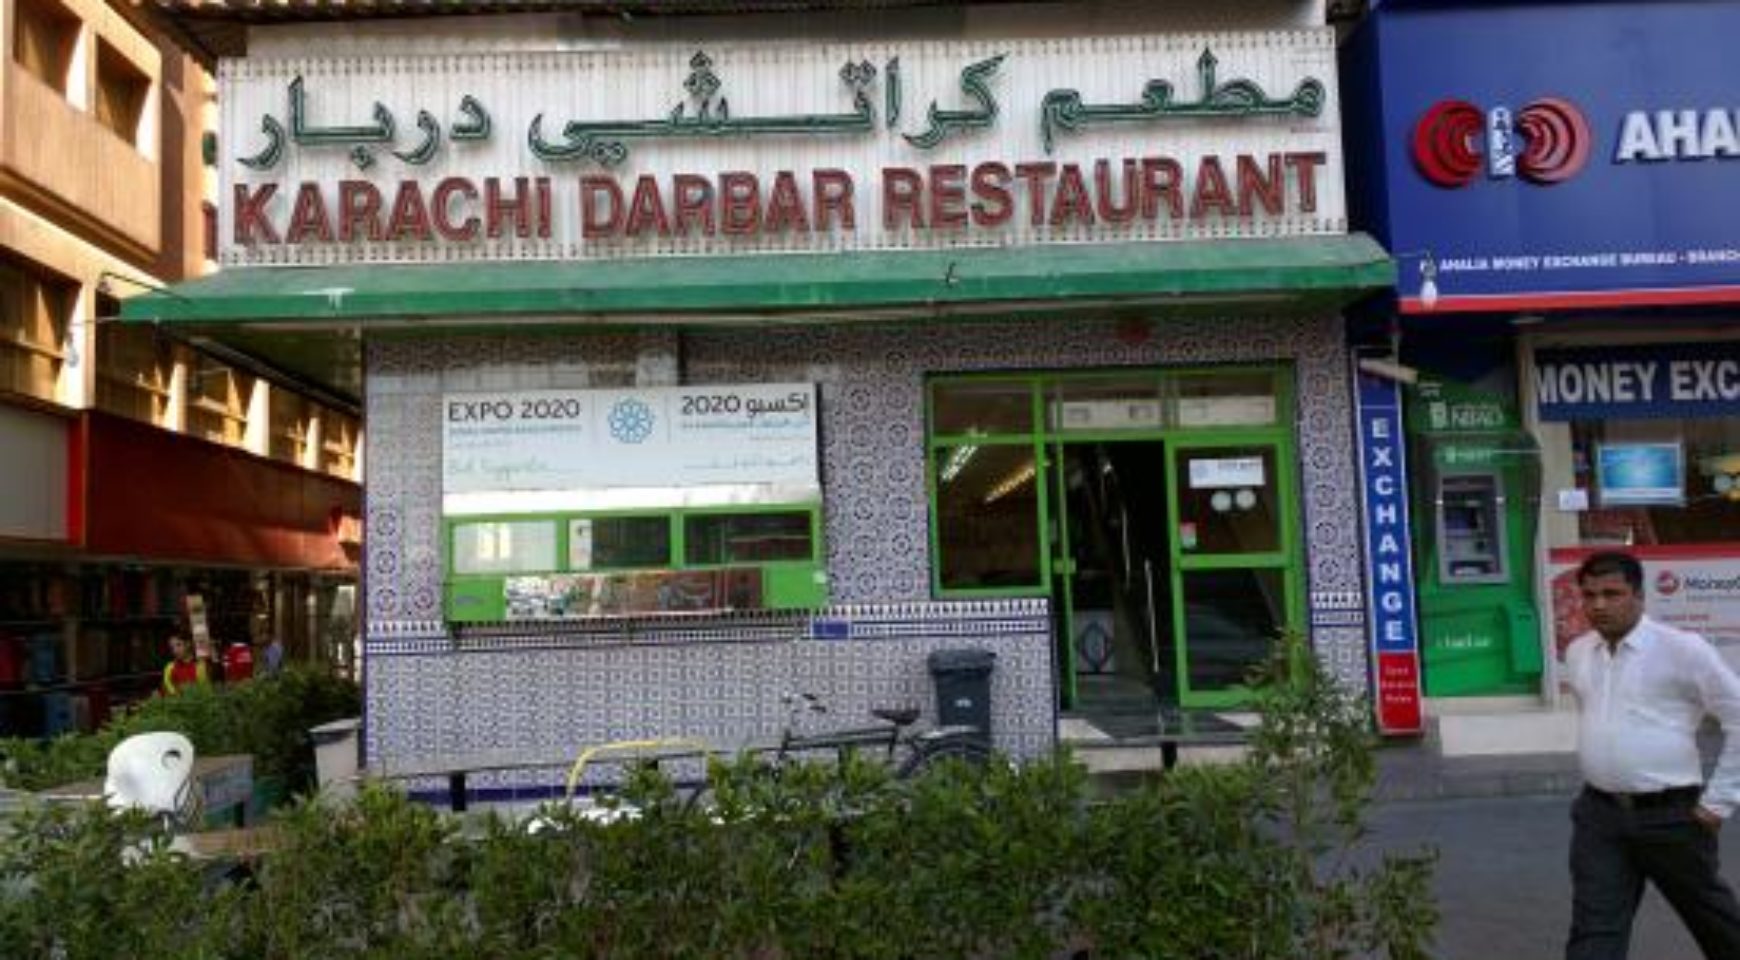 Karachi Darbar | | Dubai Restaurants Guide